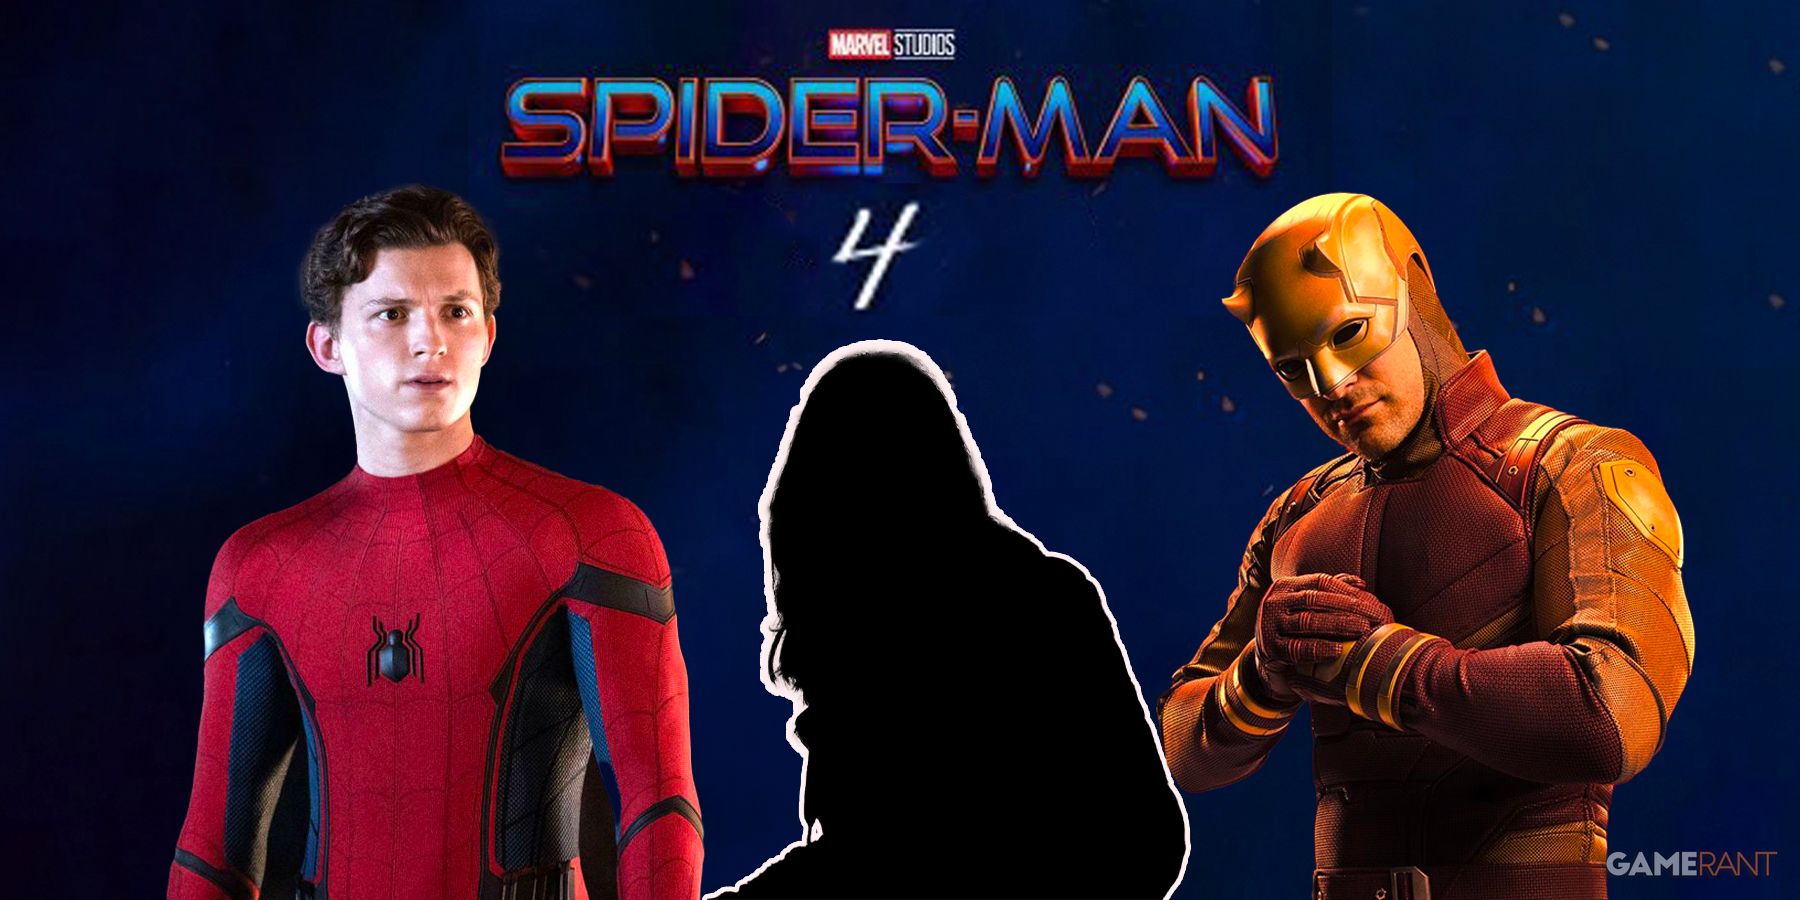 Spider-Man 4 Plot Details Jessica Jones Return